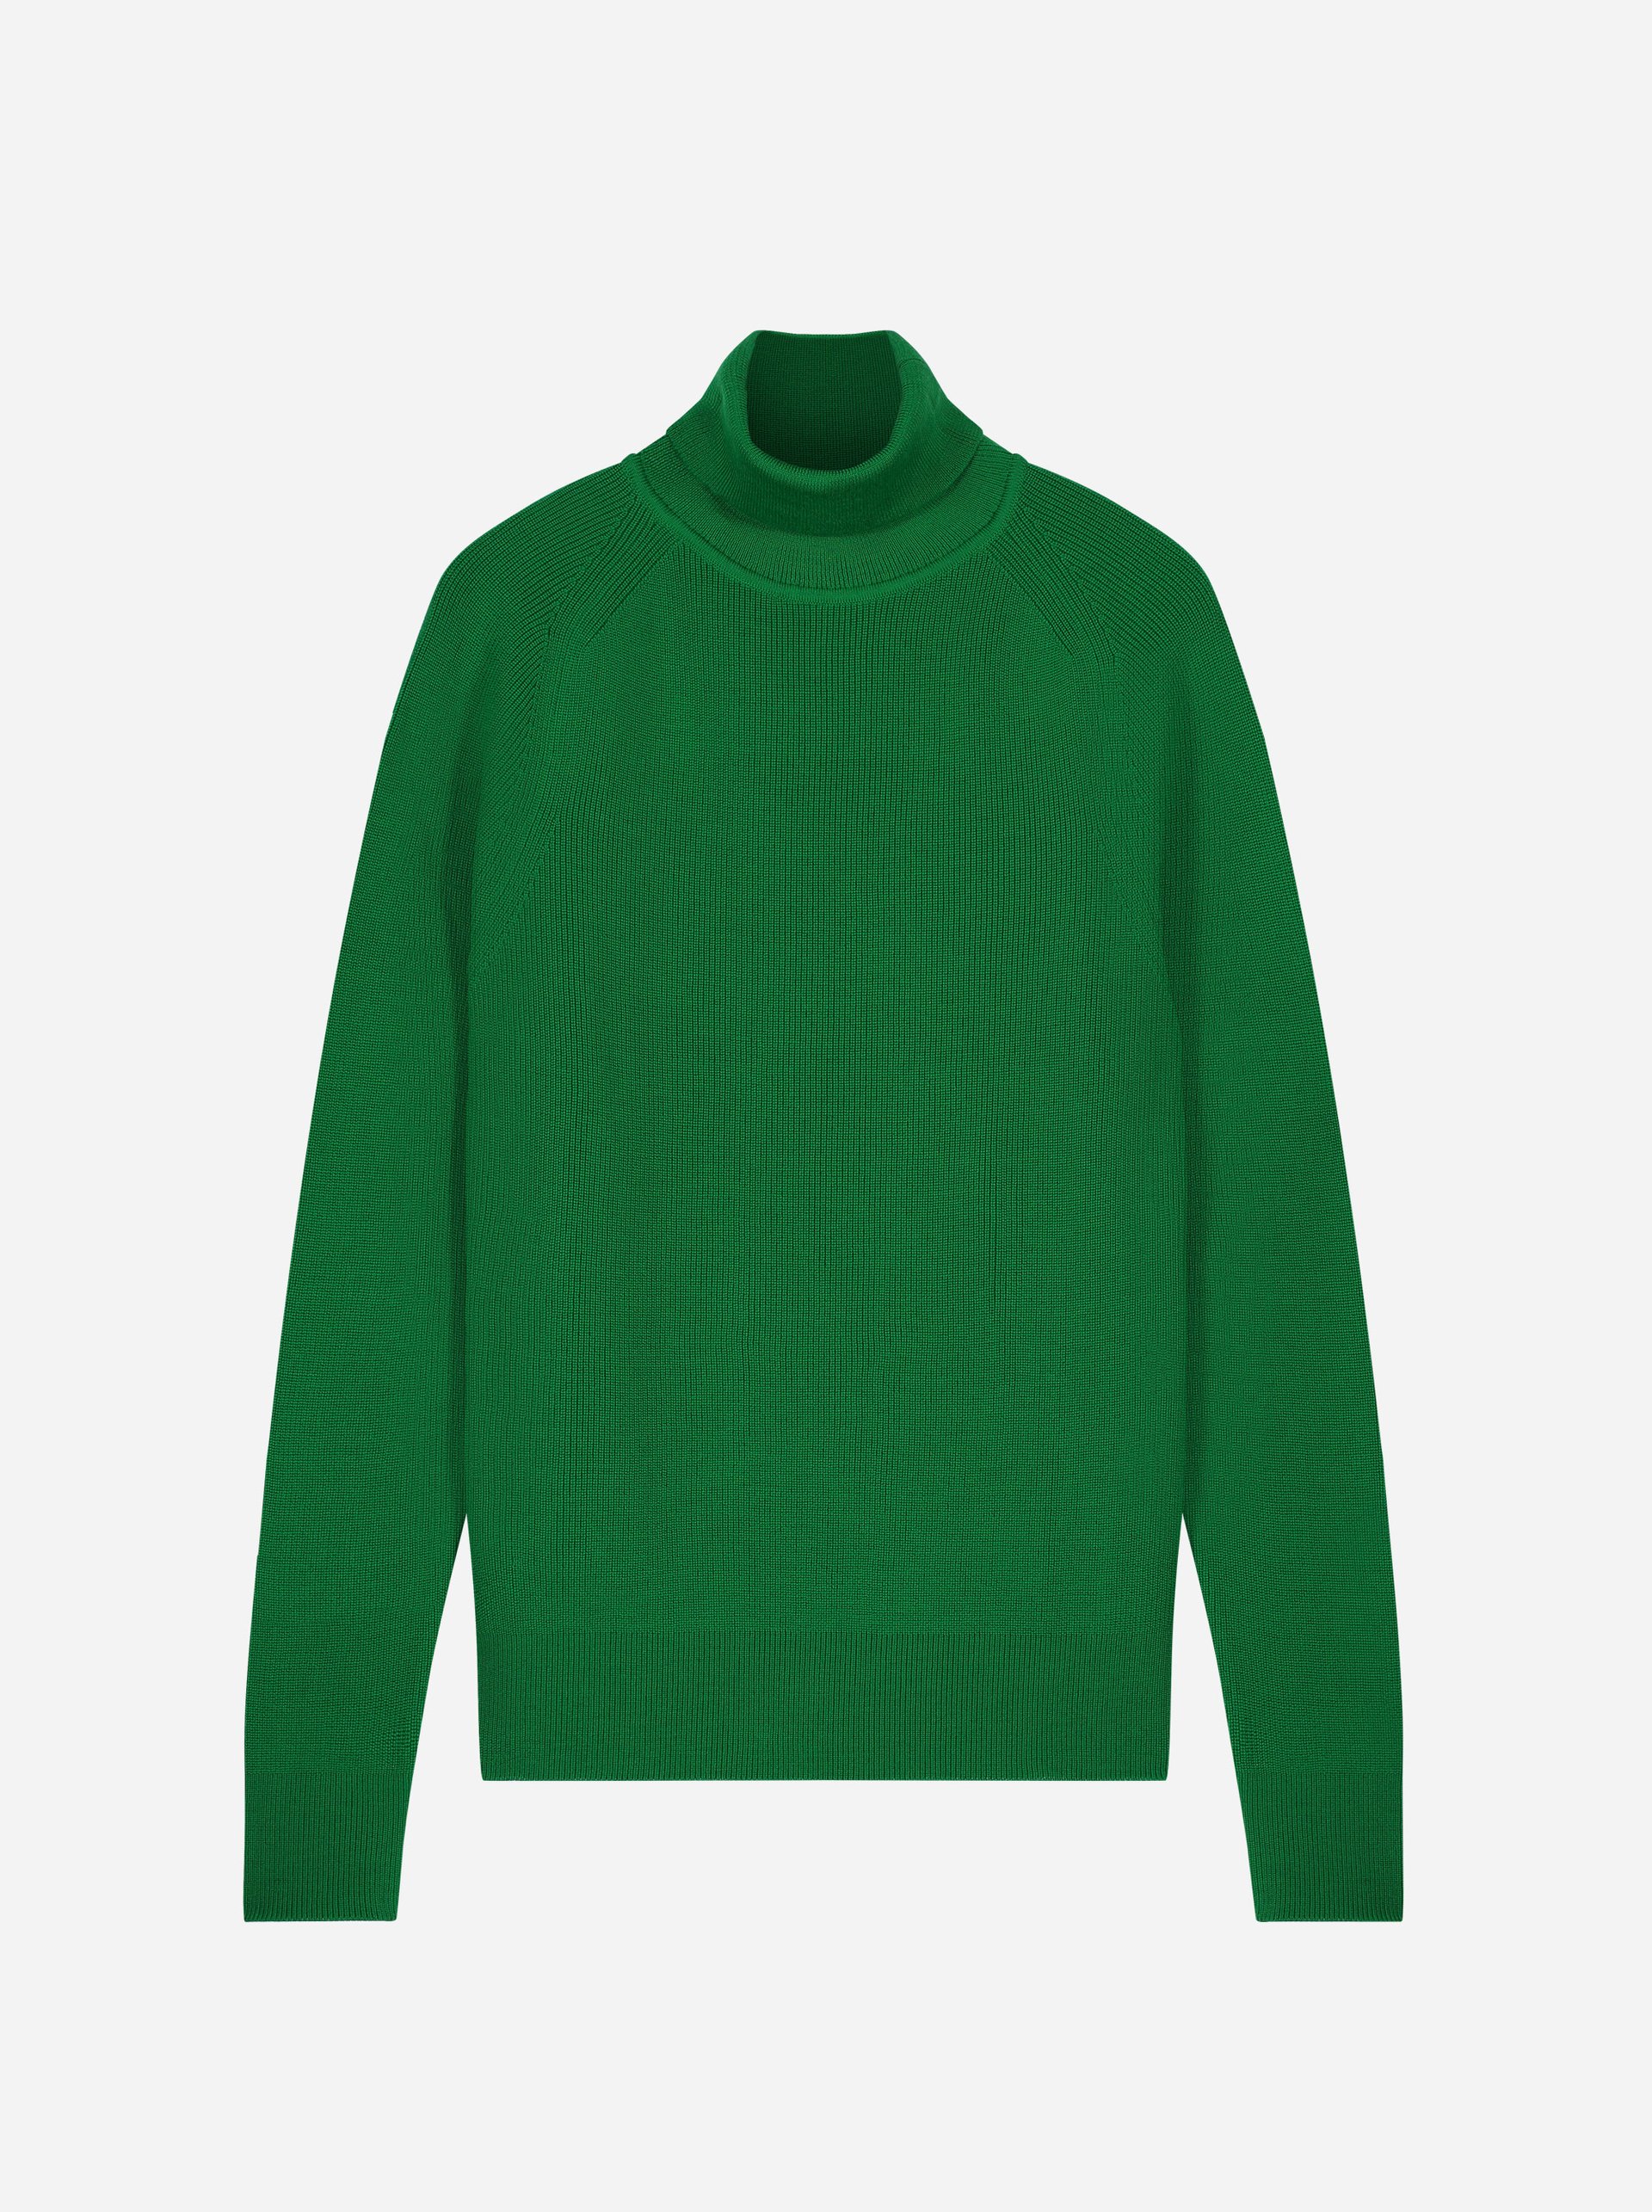 Teym - Turtleneck - The Merino Sweater - Men - Bright Green - 4